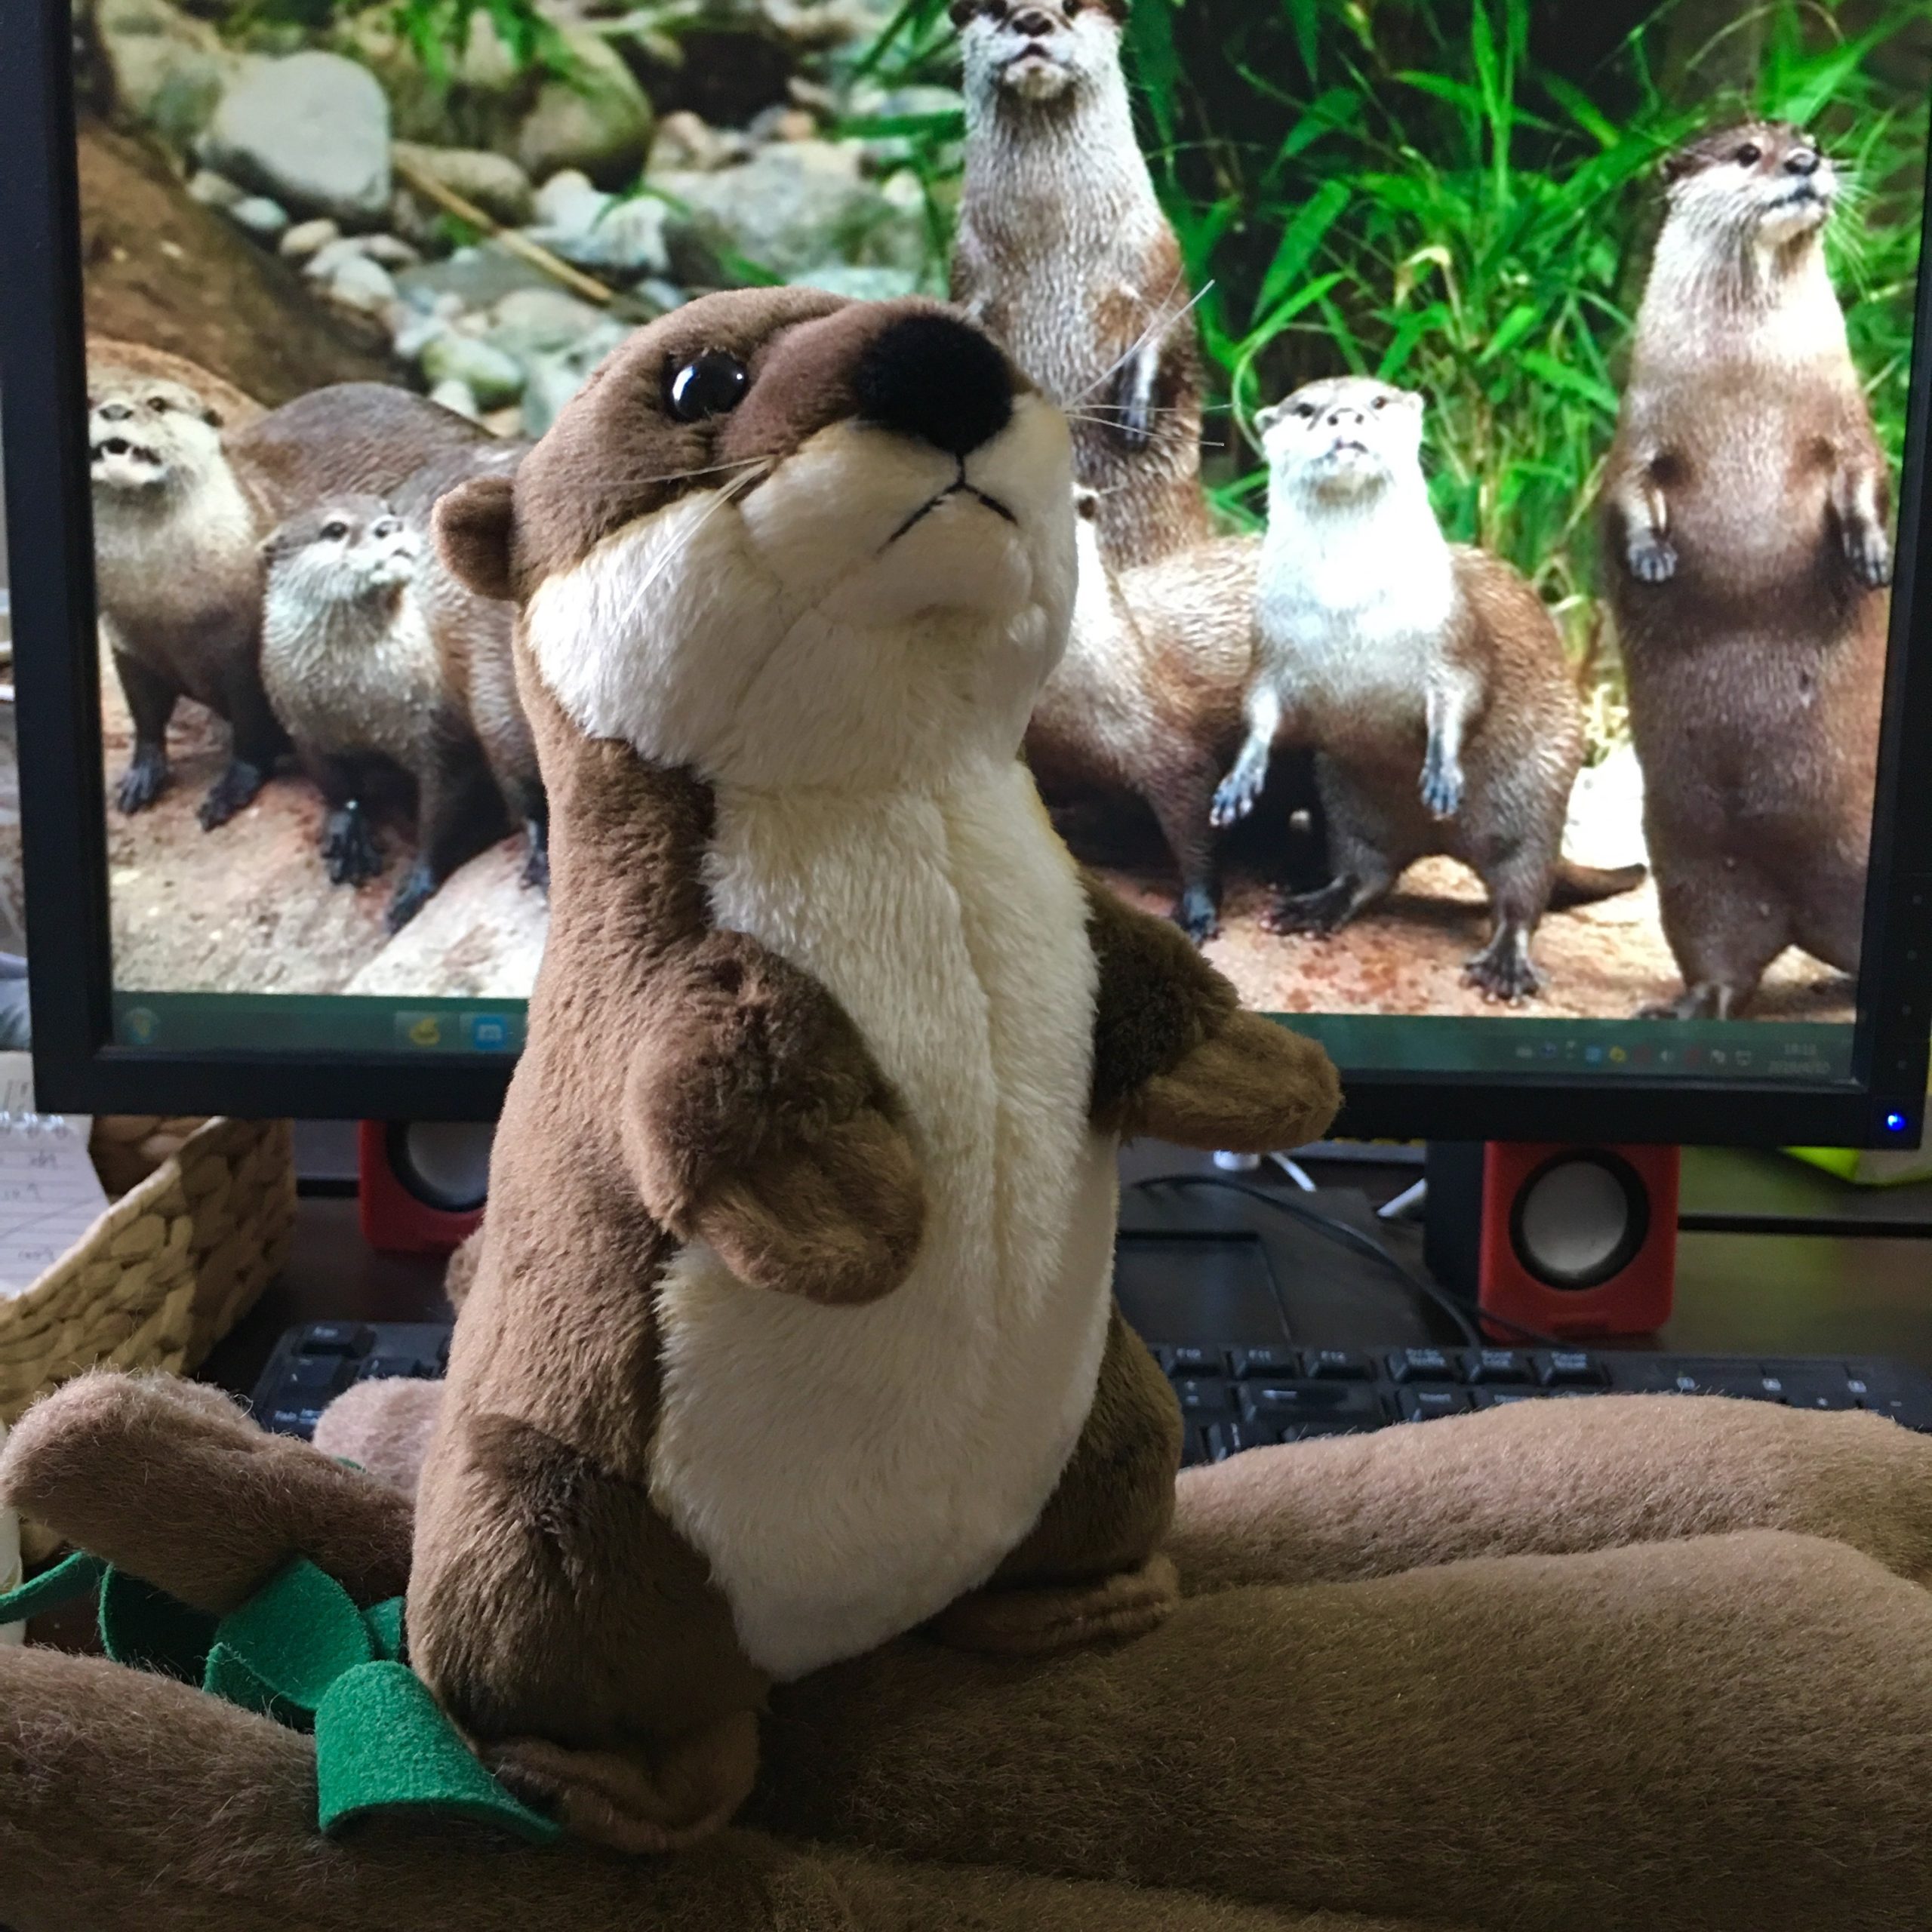 Sea Plushies Adorable Otter Mascot Plush Toy - Perfect Cuddly Companion